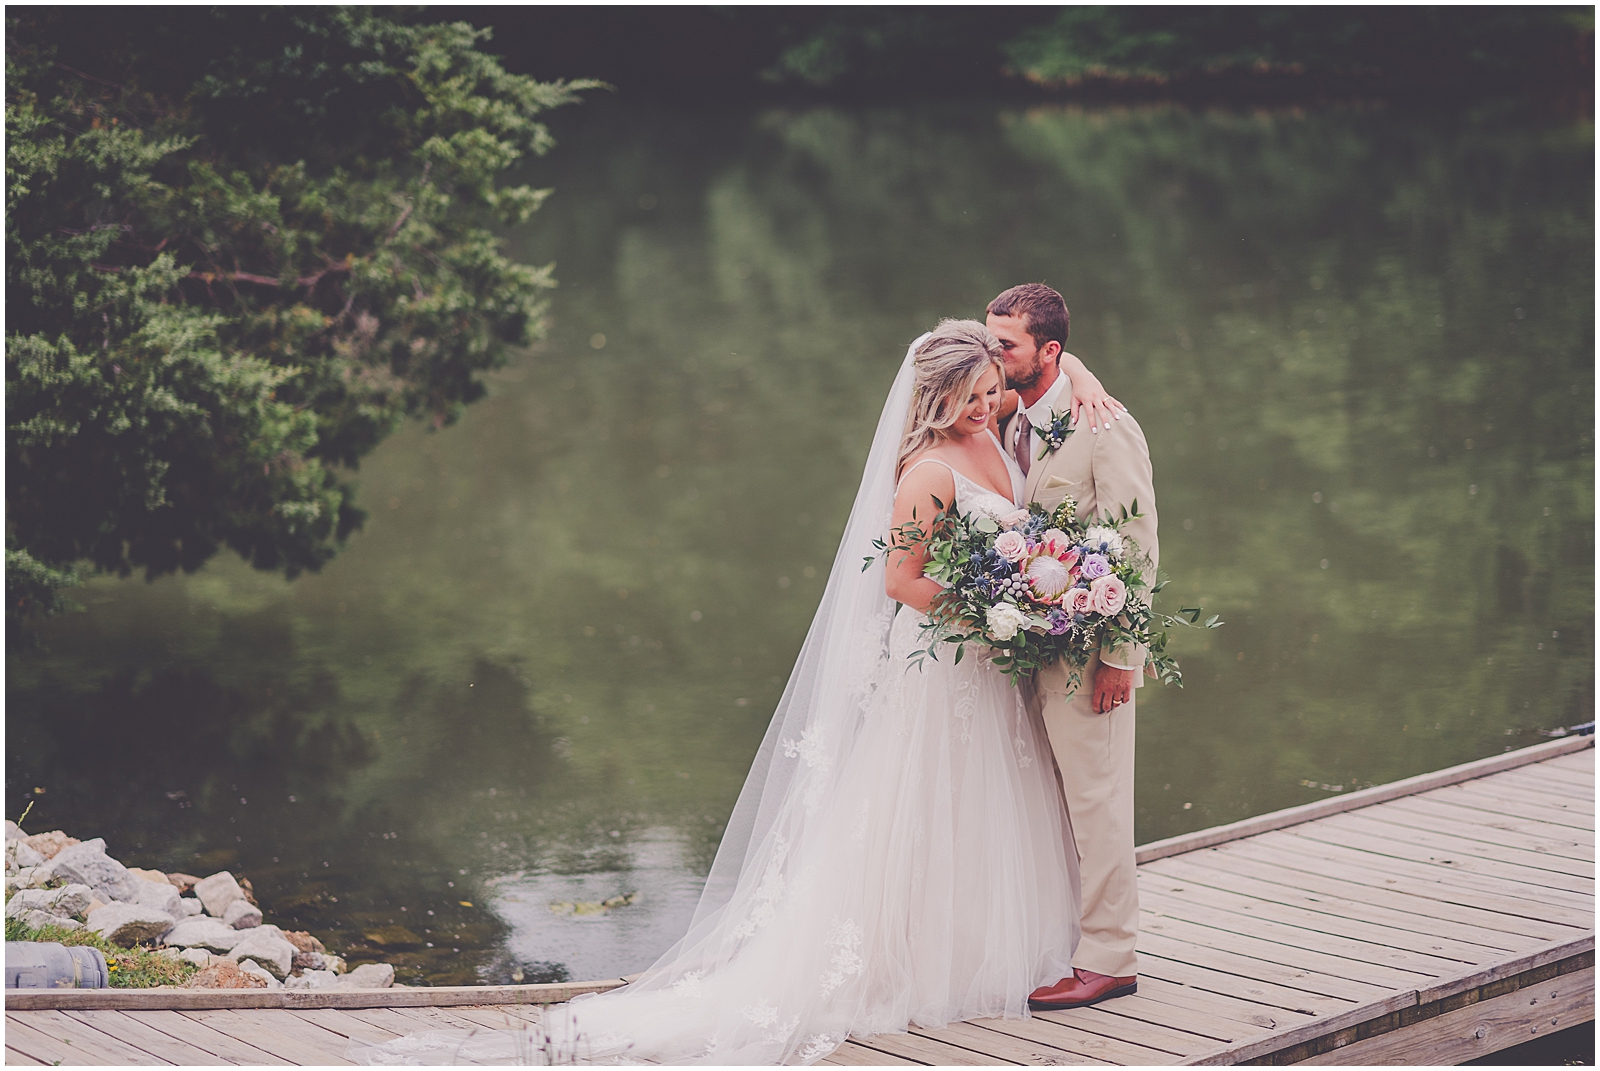 Boho wedding day at Hamilton's on the Lake in Jacksonville, Illinois with Chicagoland wedding photographer Kara Evans Photographer.